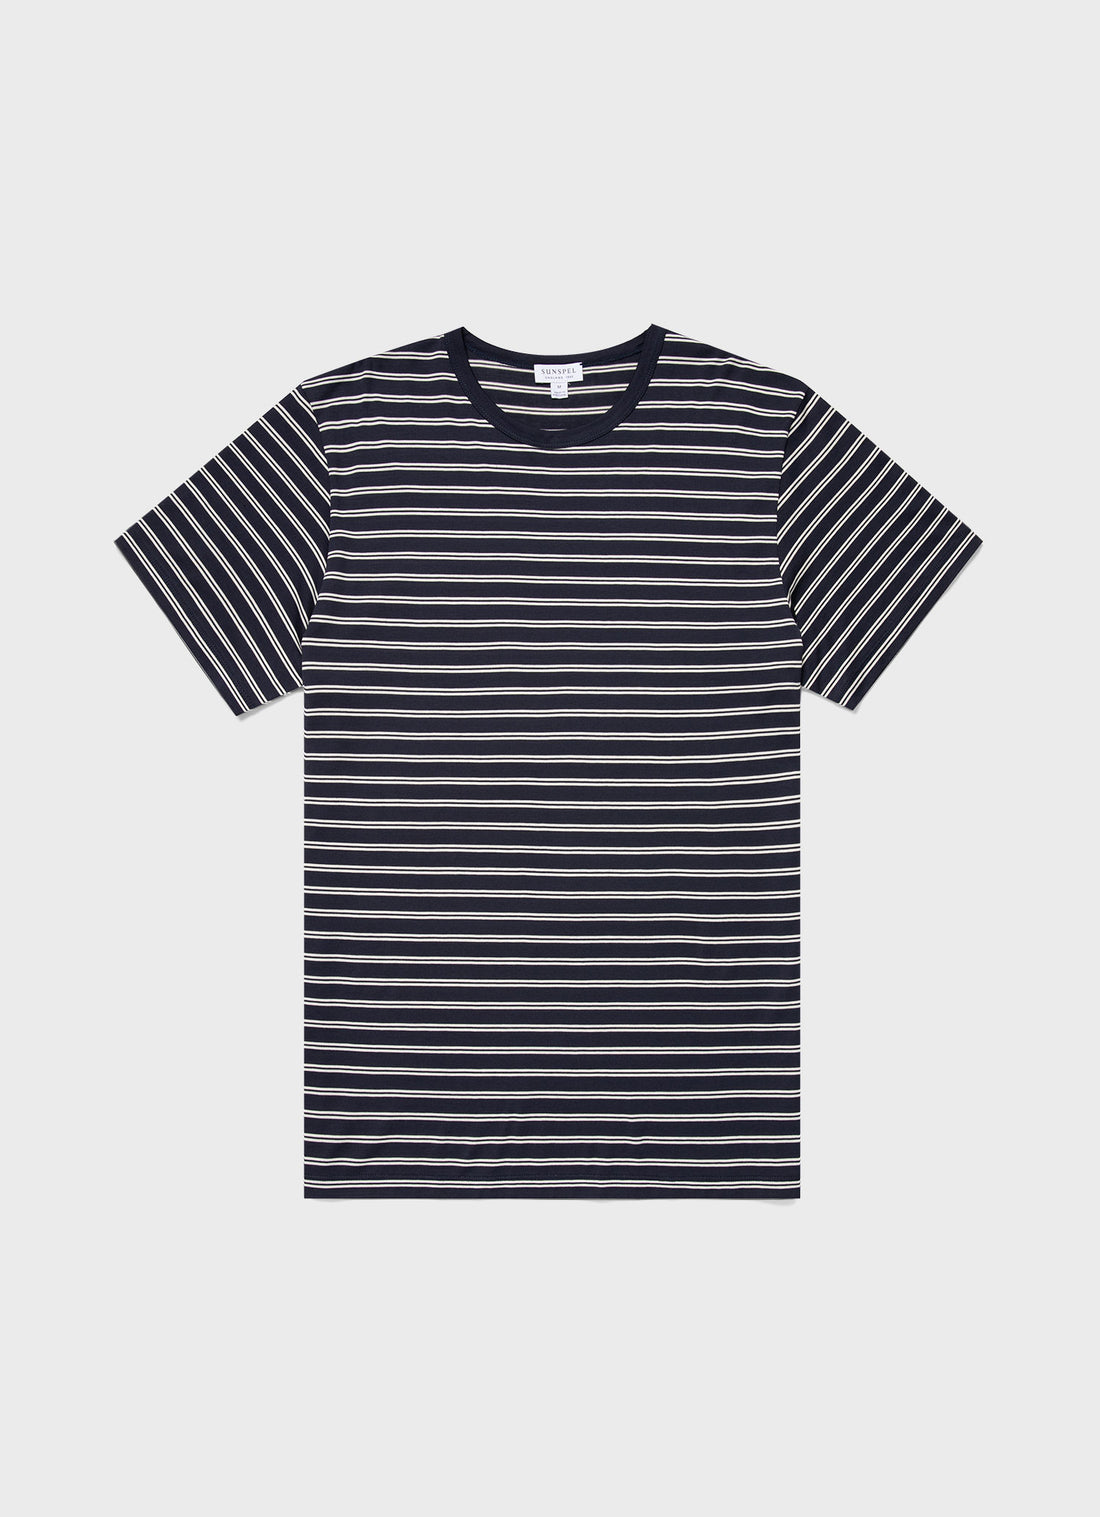 Men's Classic T-shirt in Navy/Ecru Tramline Stripe